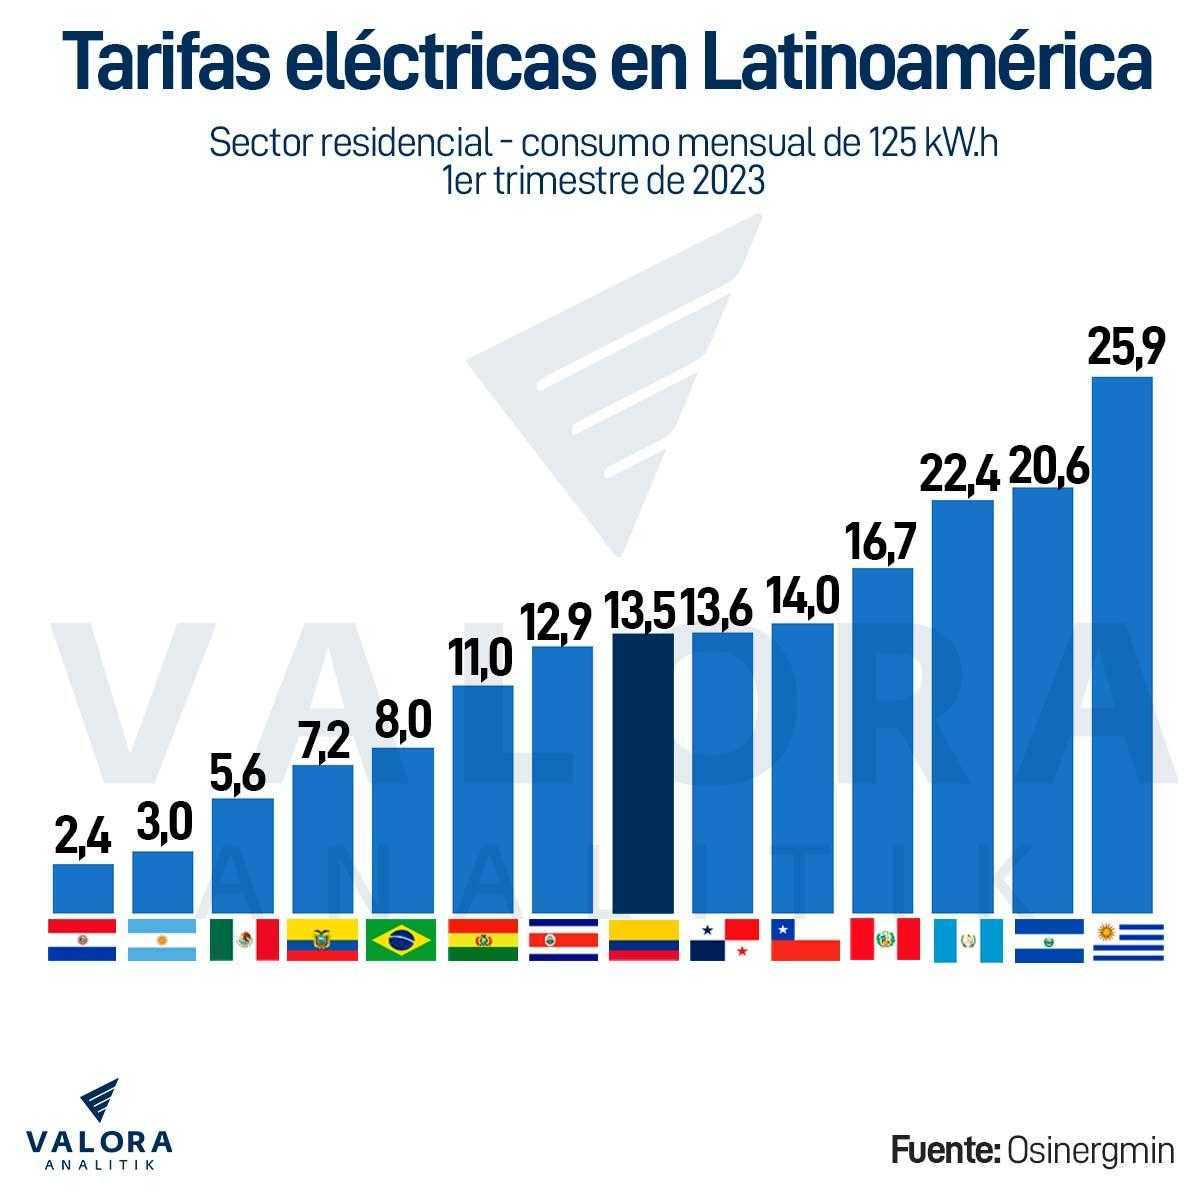 Tarifas eléctricas en Latinoamérica. Foto: Valora Analitik.